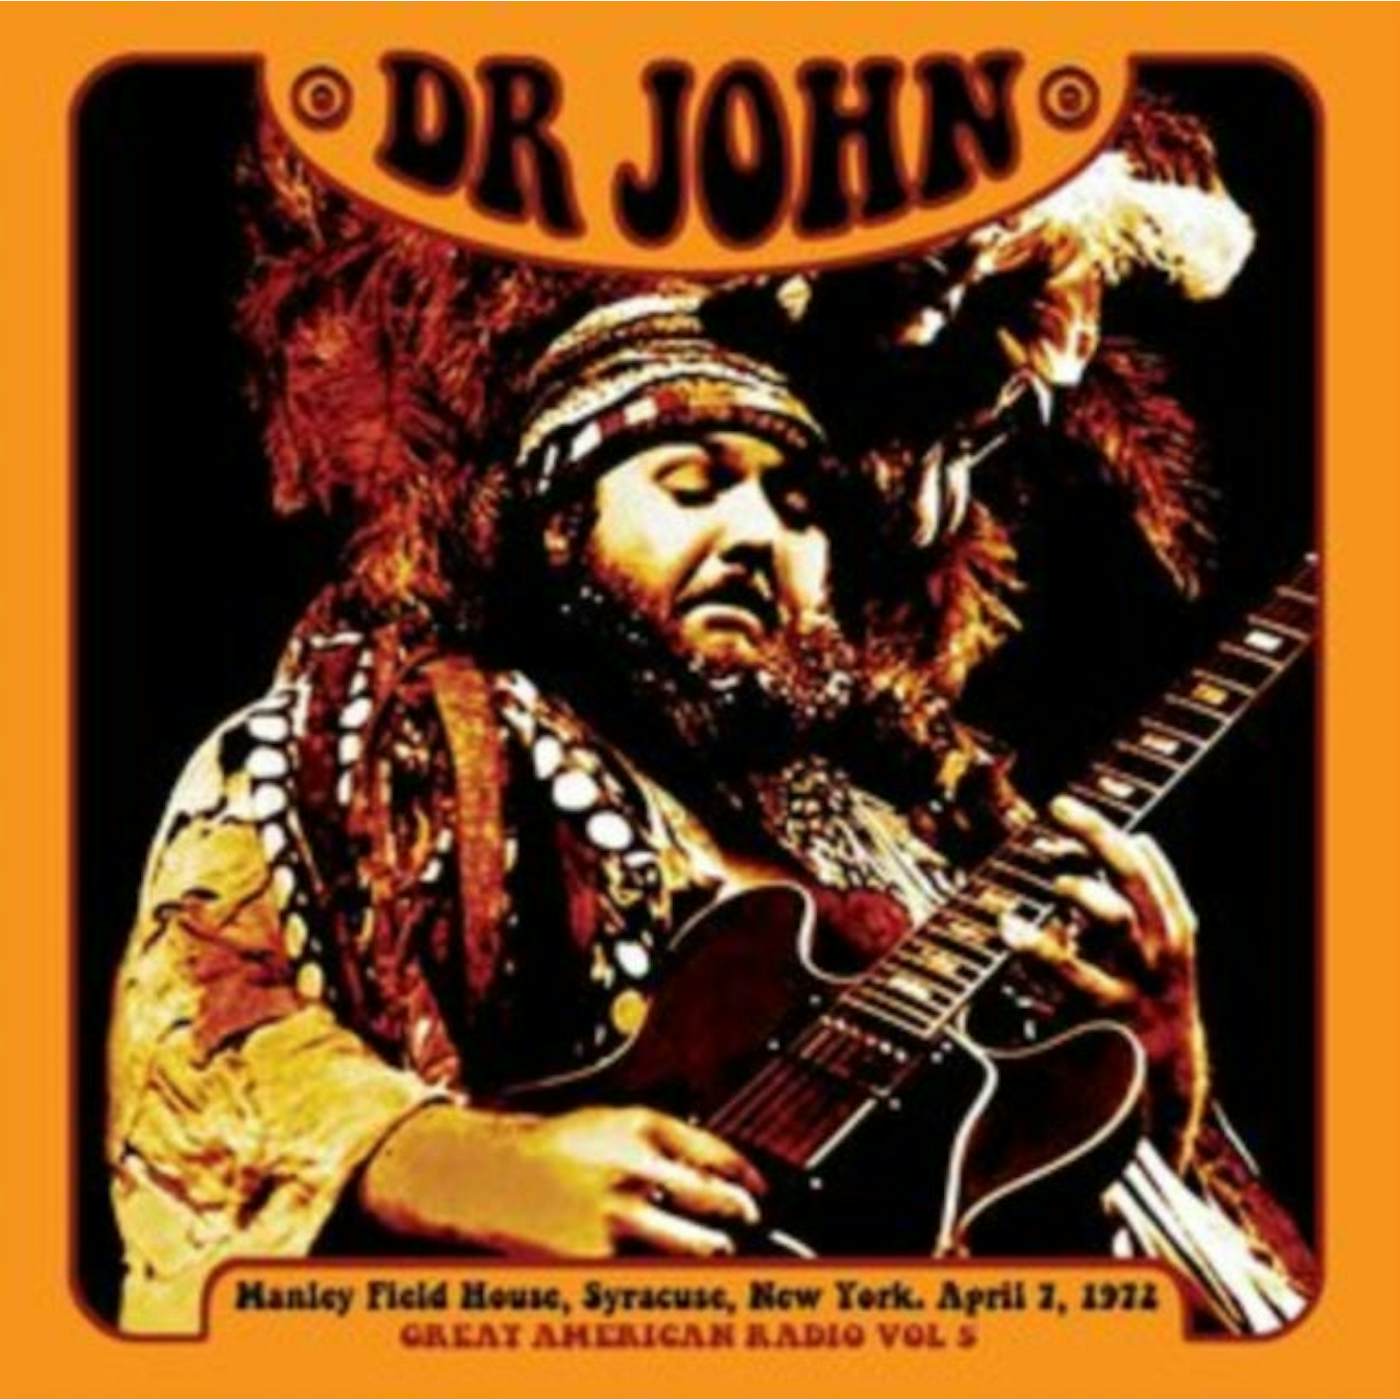 Dr. John CD - Great American Radio Volume 5